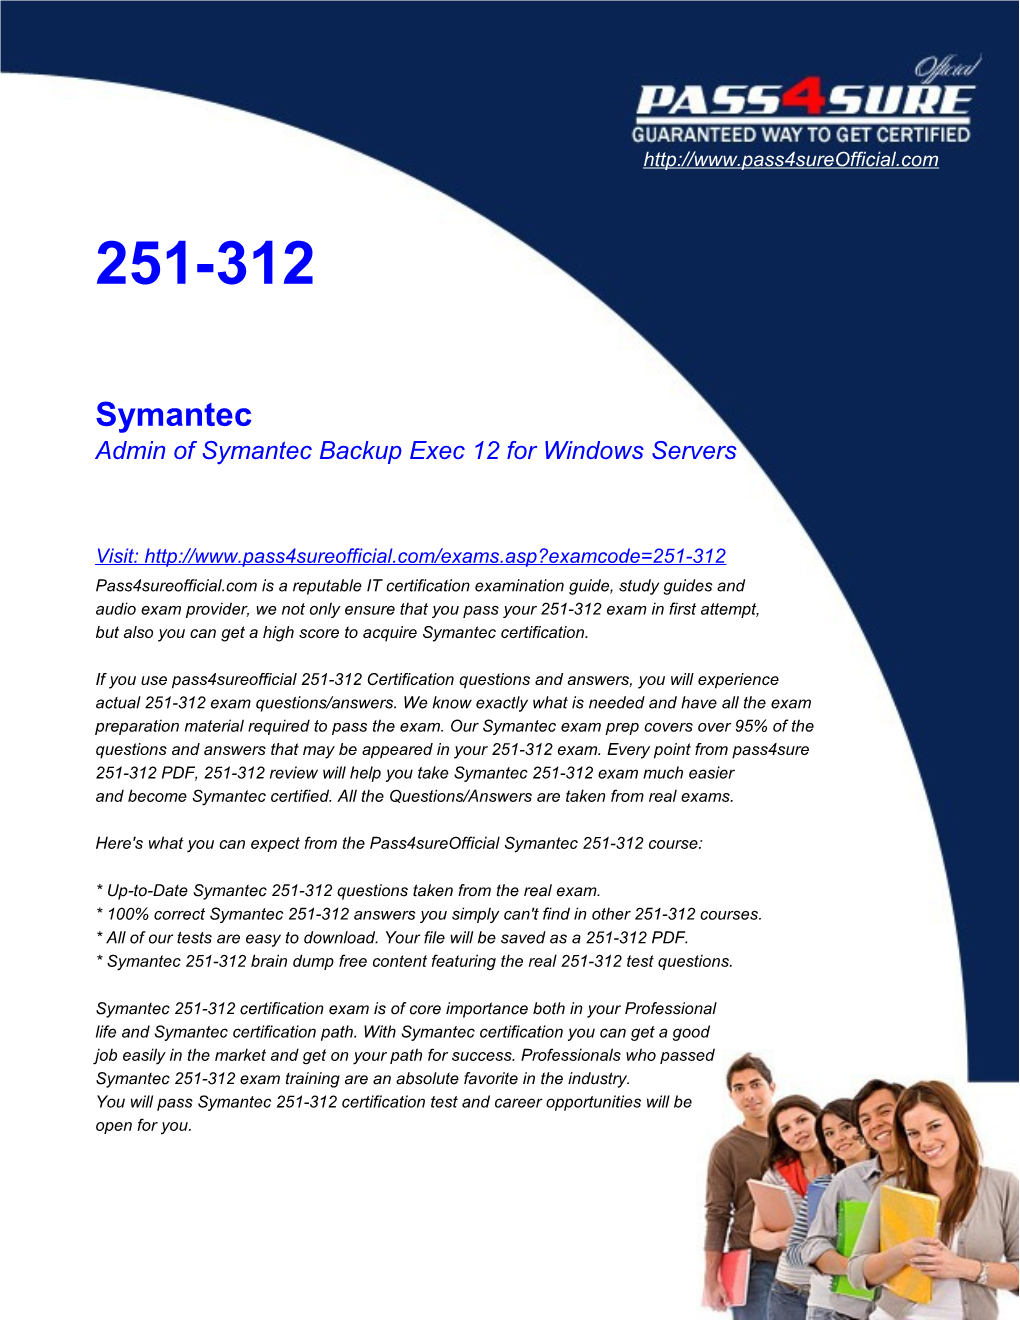 Admin of Symantec Backup Exec 12 for Windows Servers